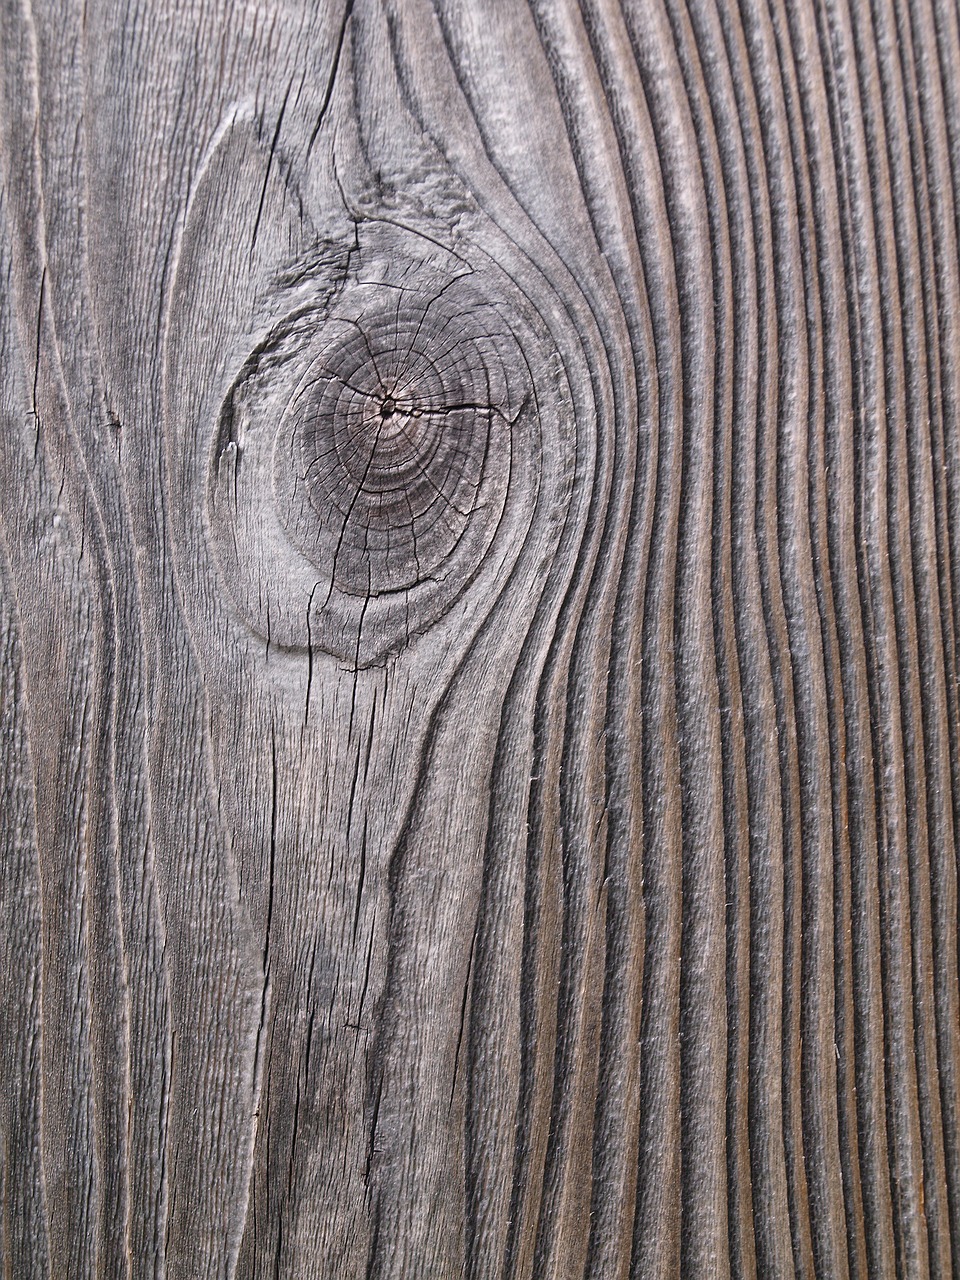 wood grain annual rings free photo